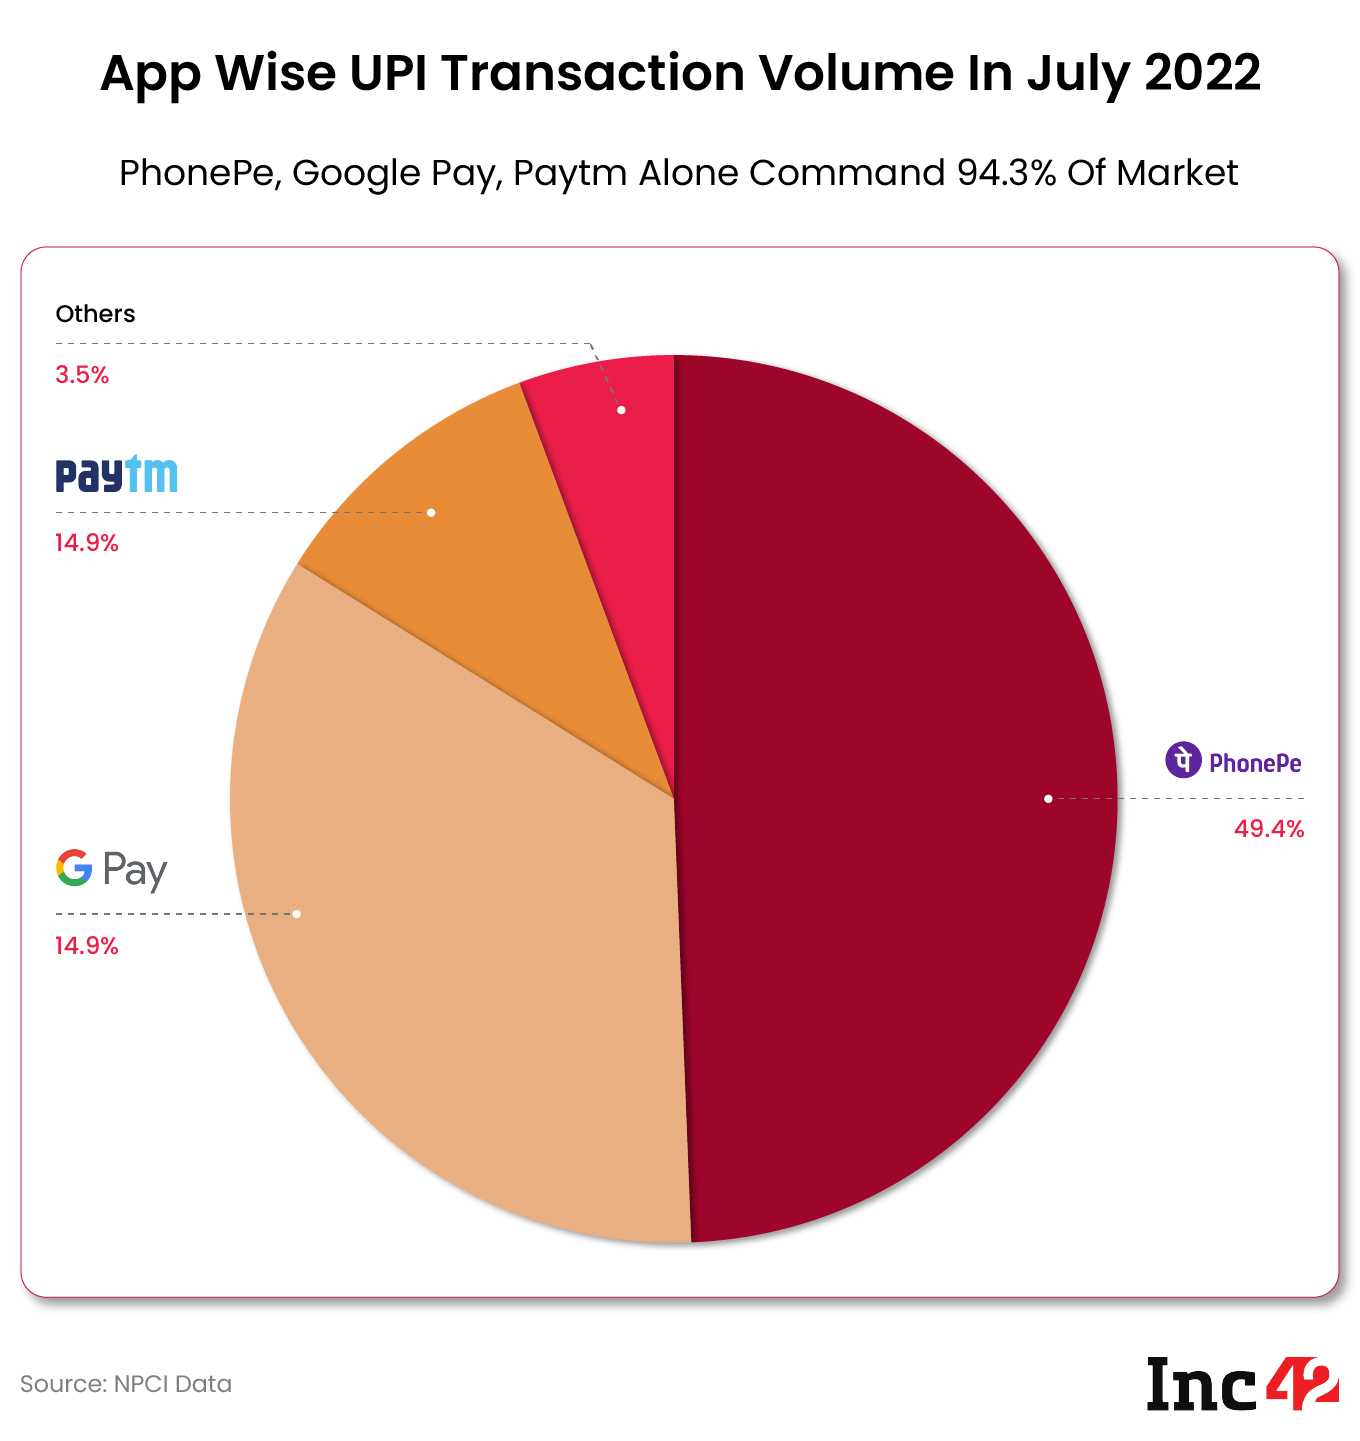 PhonePe, Google Pay & Paytm Transaction Volume